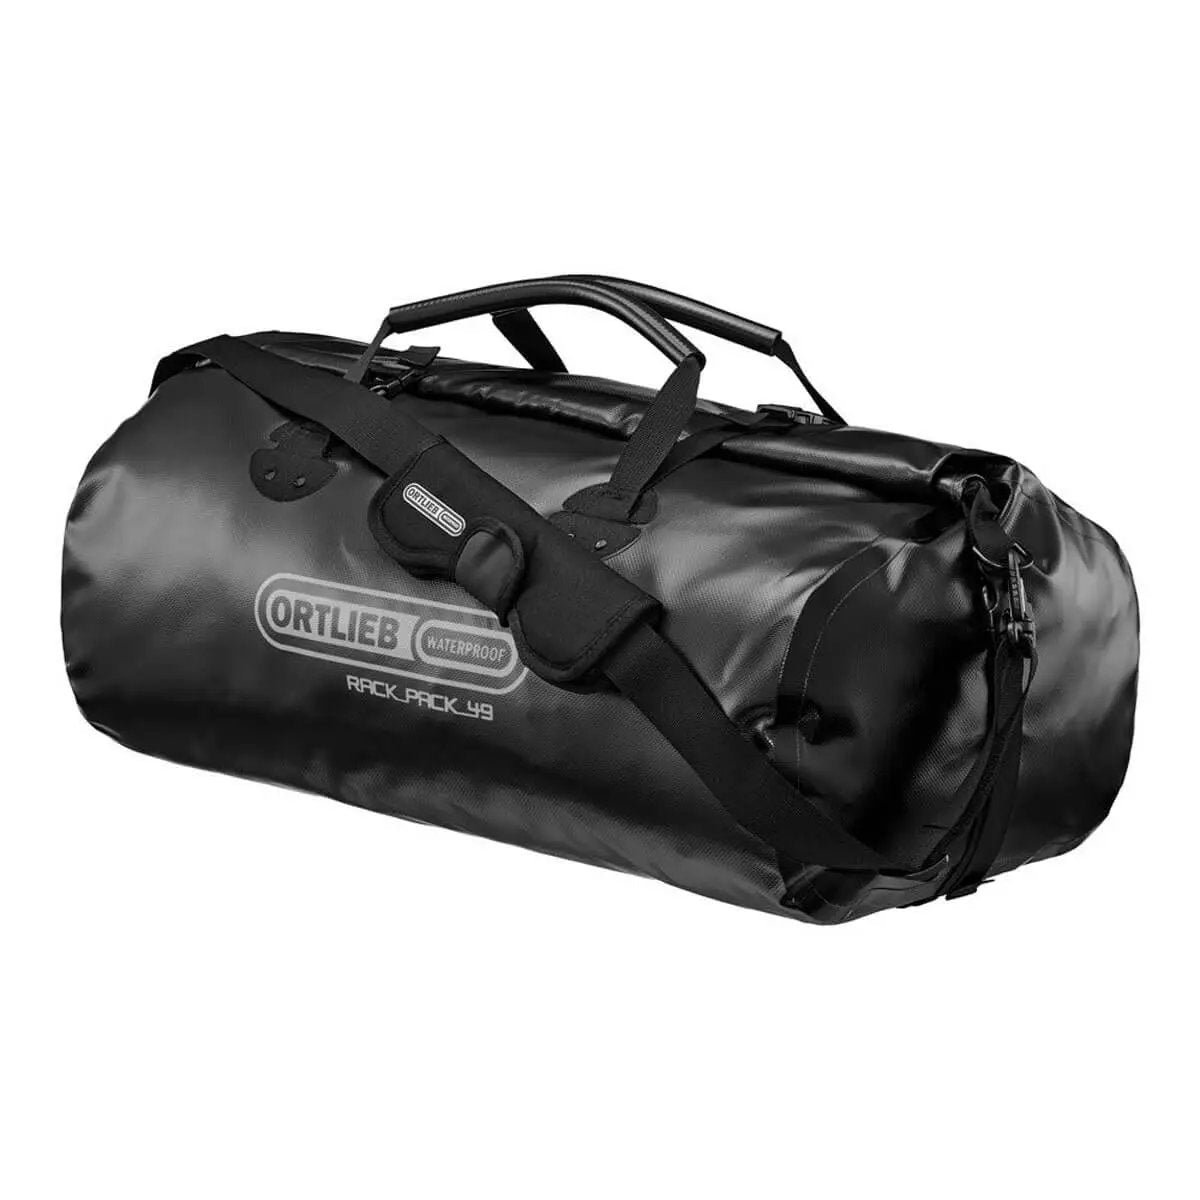 Ortlieb Rack-Pack 49L Waterproof Duffle Bag - John Bull Clothing